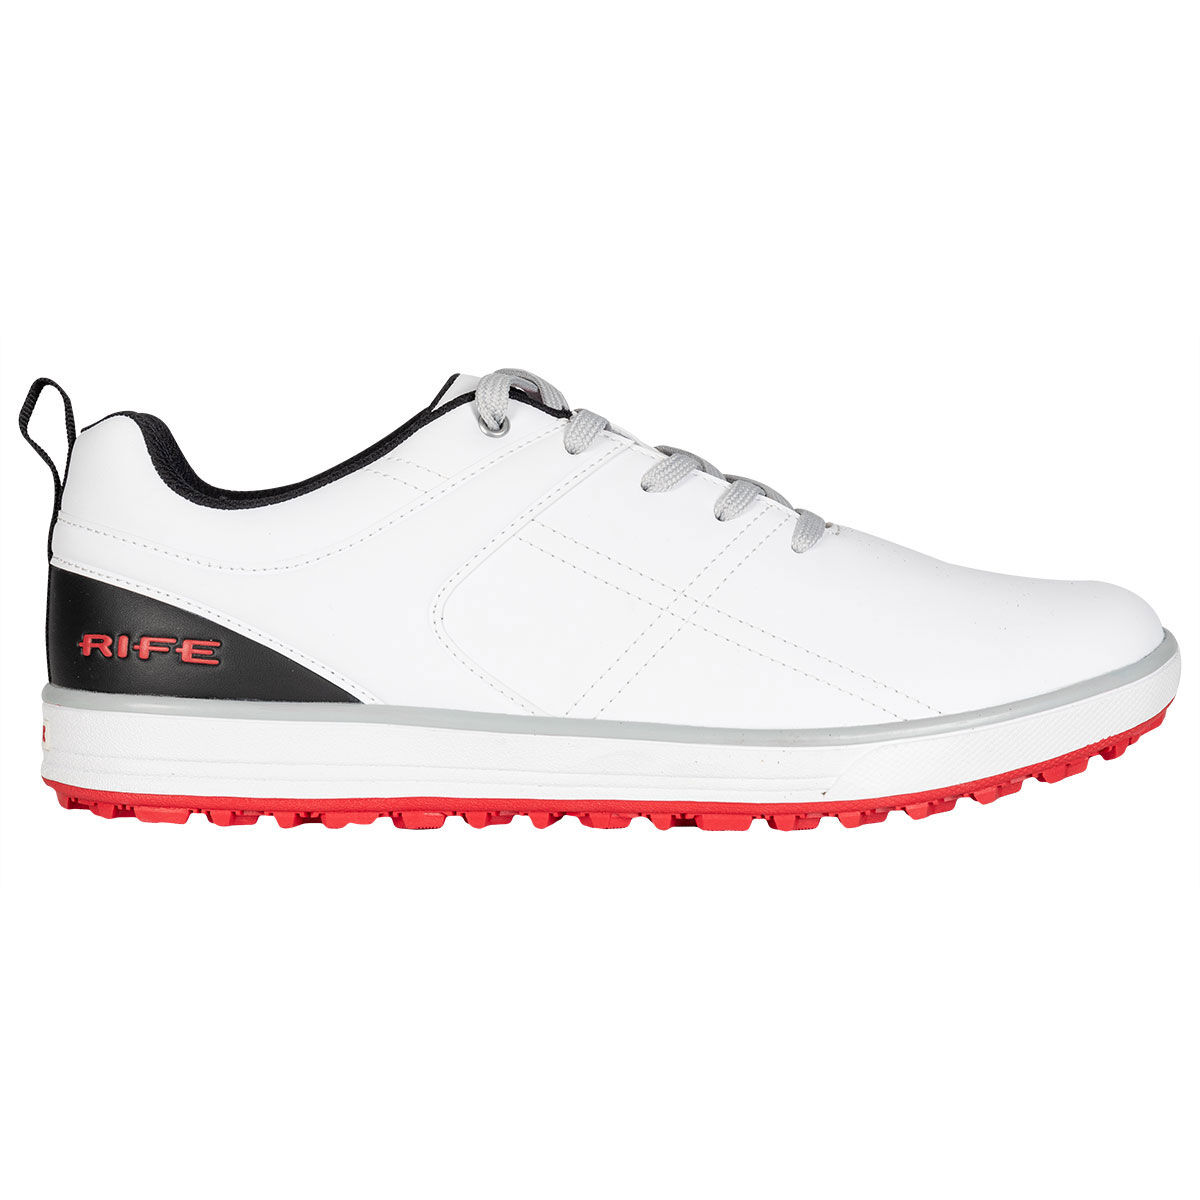 Chaussures Rife RF-01 Pro-Approach Spikeless, homme, 9, Blanc/Noir/Rouge, Normal | Online Golf